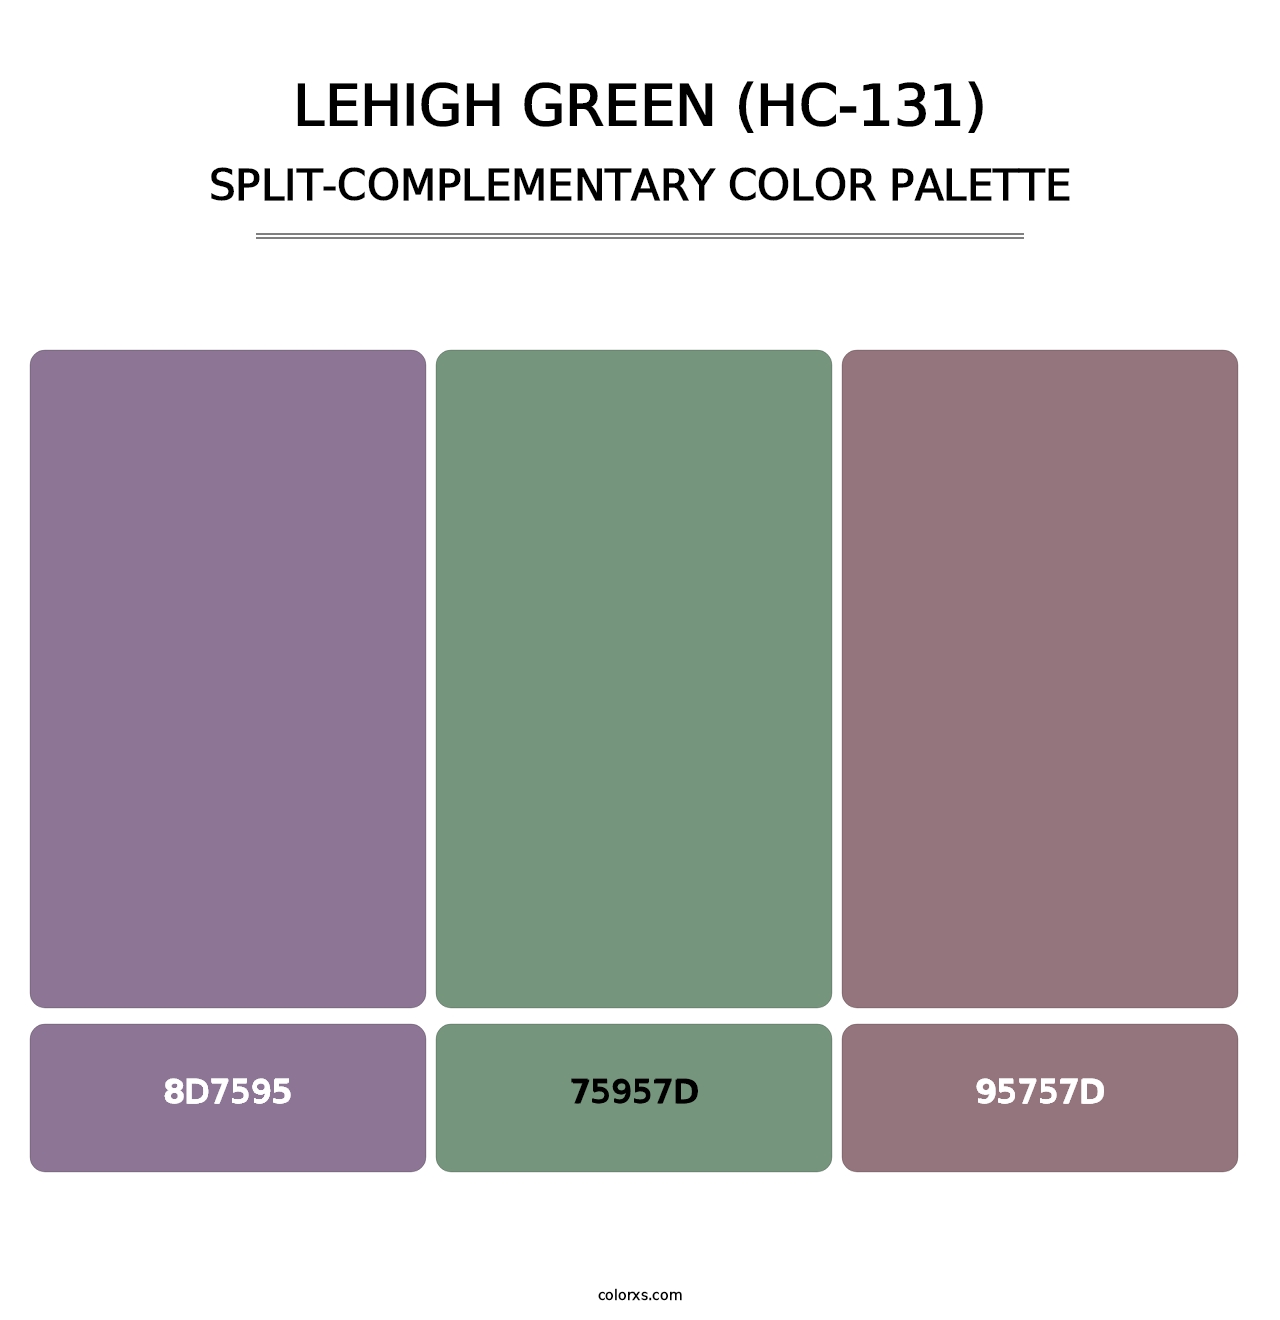 Lehigh Green (HC-131) - Split-Complementary Color Palette